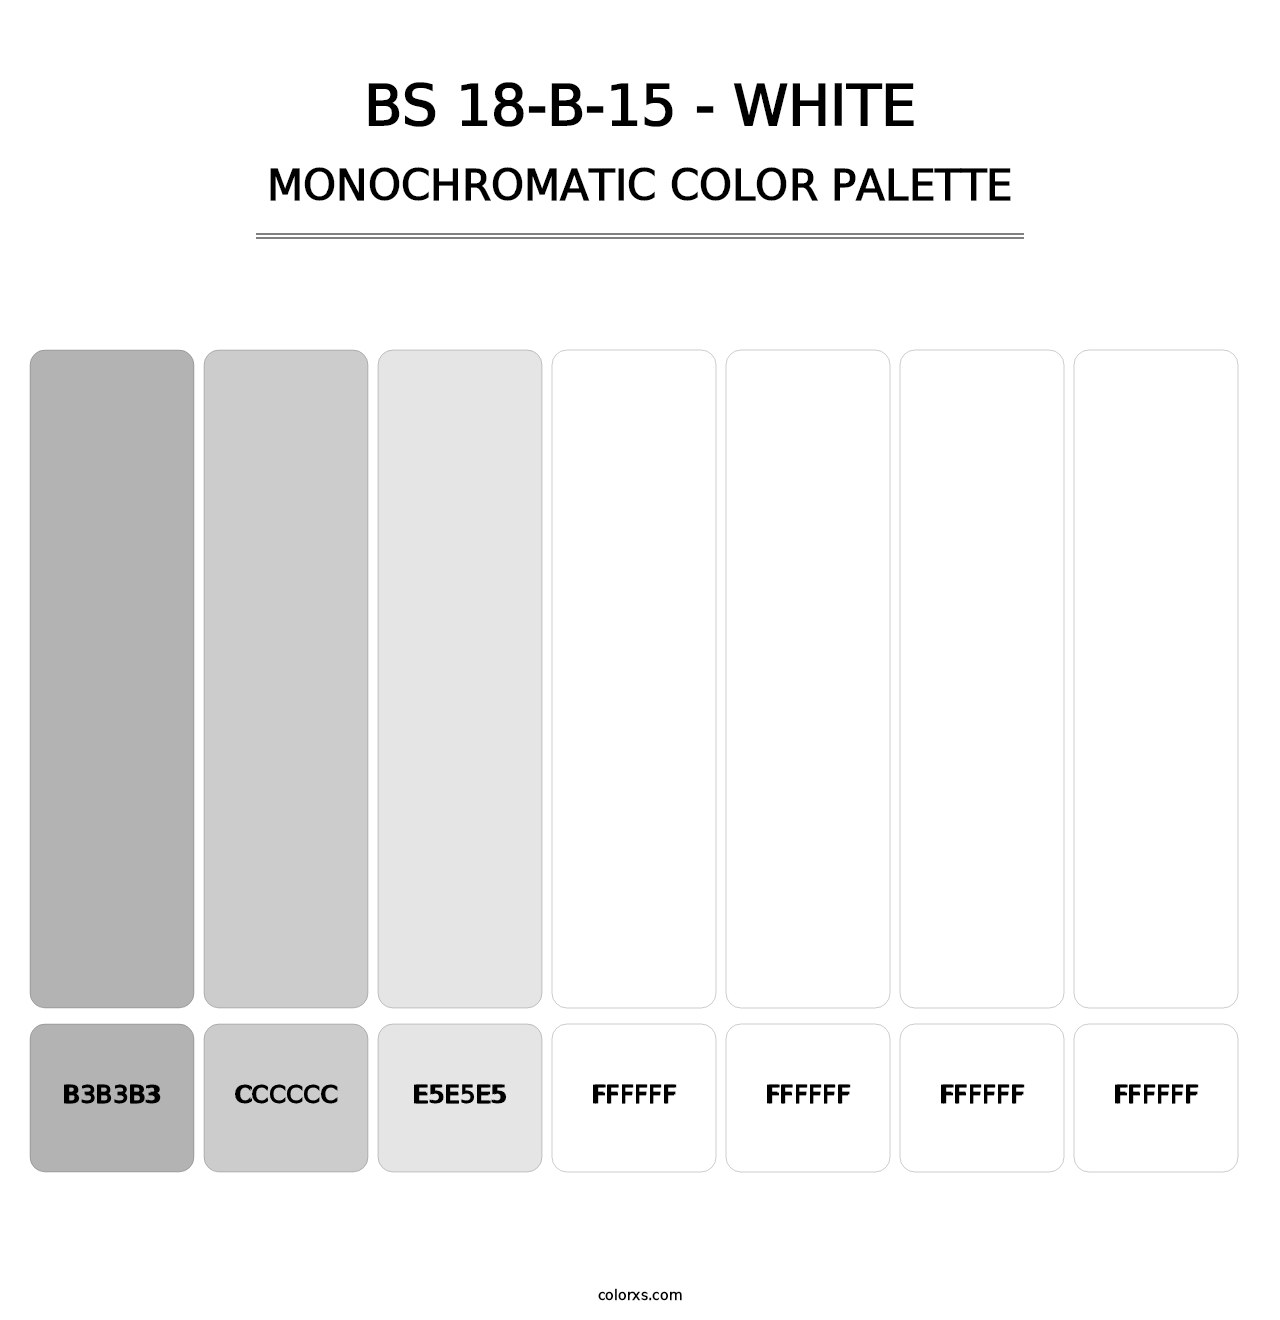 BS 18-B-15 - White - Monochromatic Color Palette